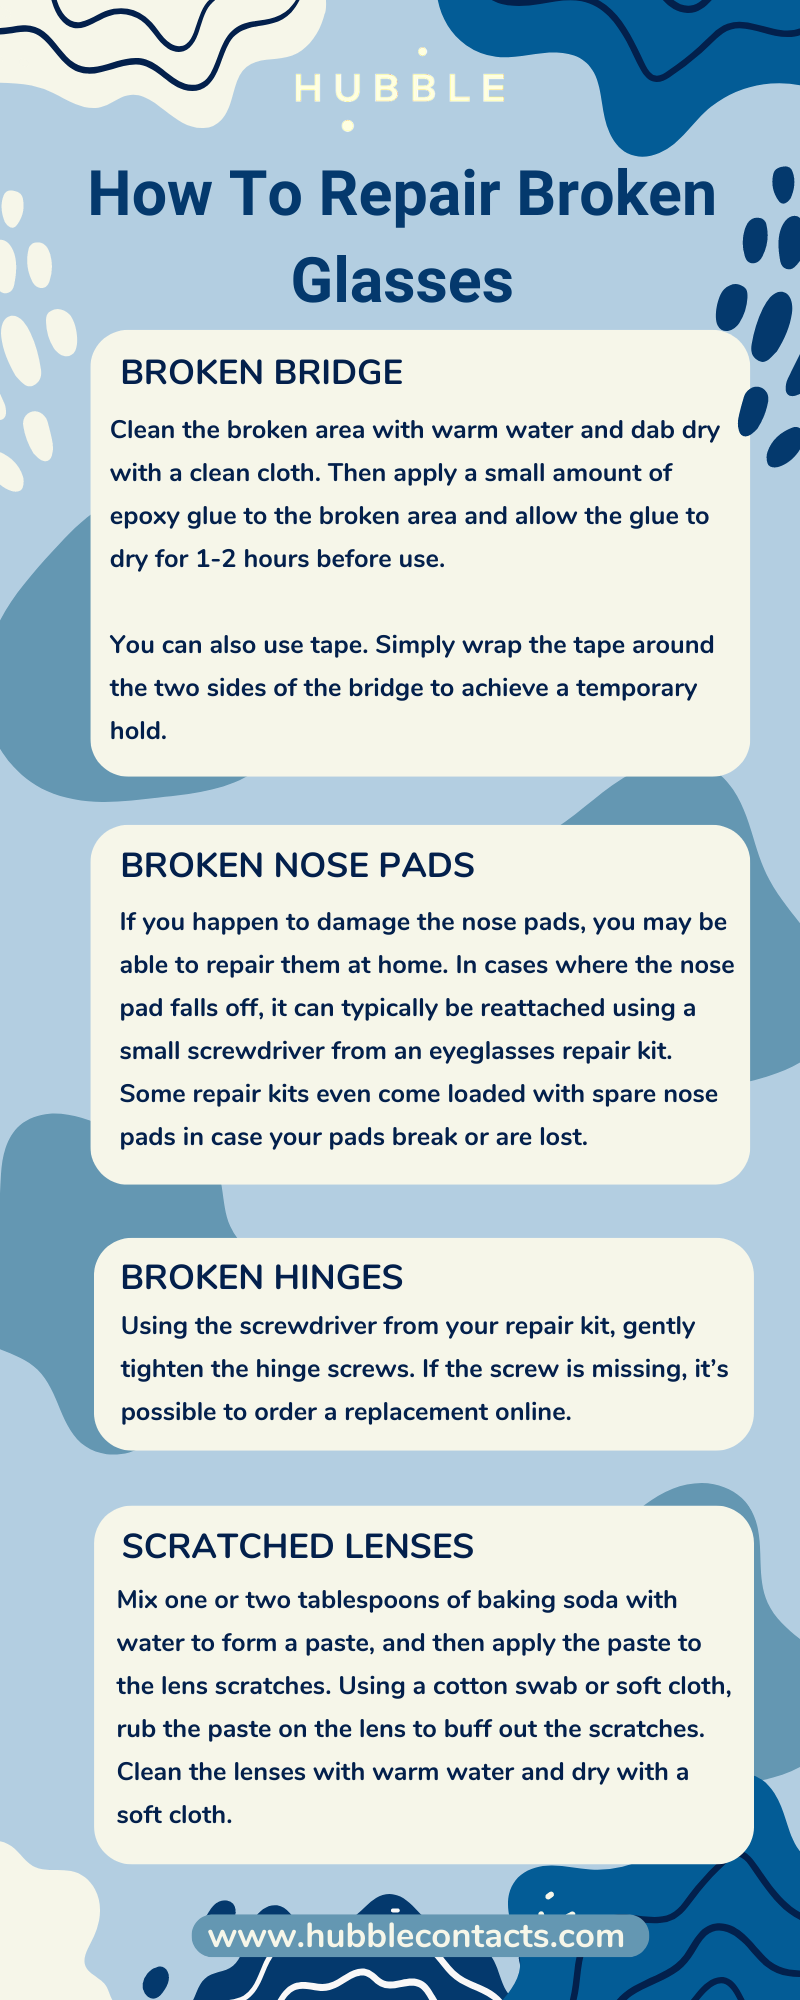 How to Repair Broken Glasses Infographic